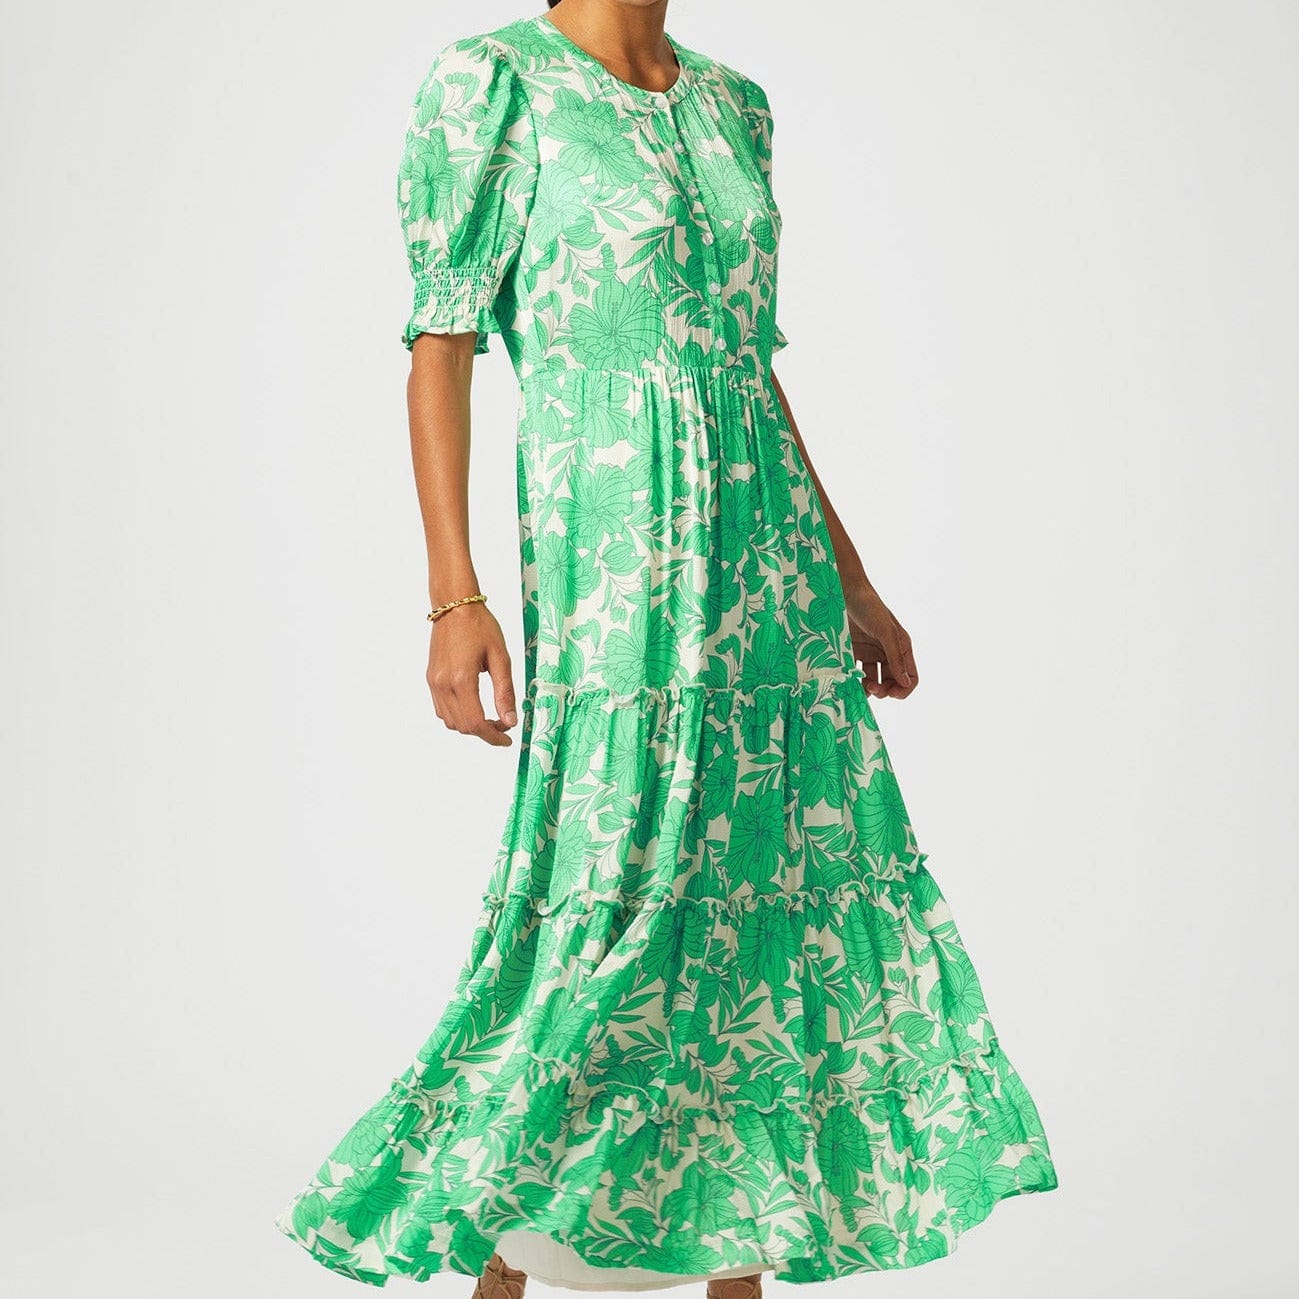 Aspiga Cordelia Dress in Lined Floral Cream/Green